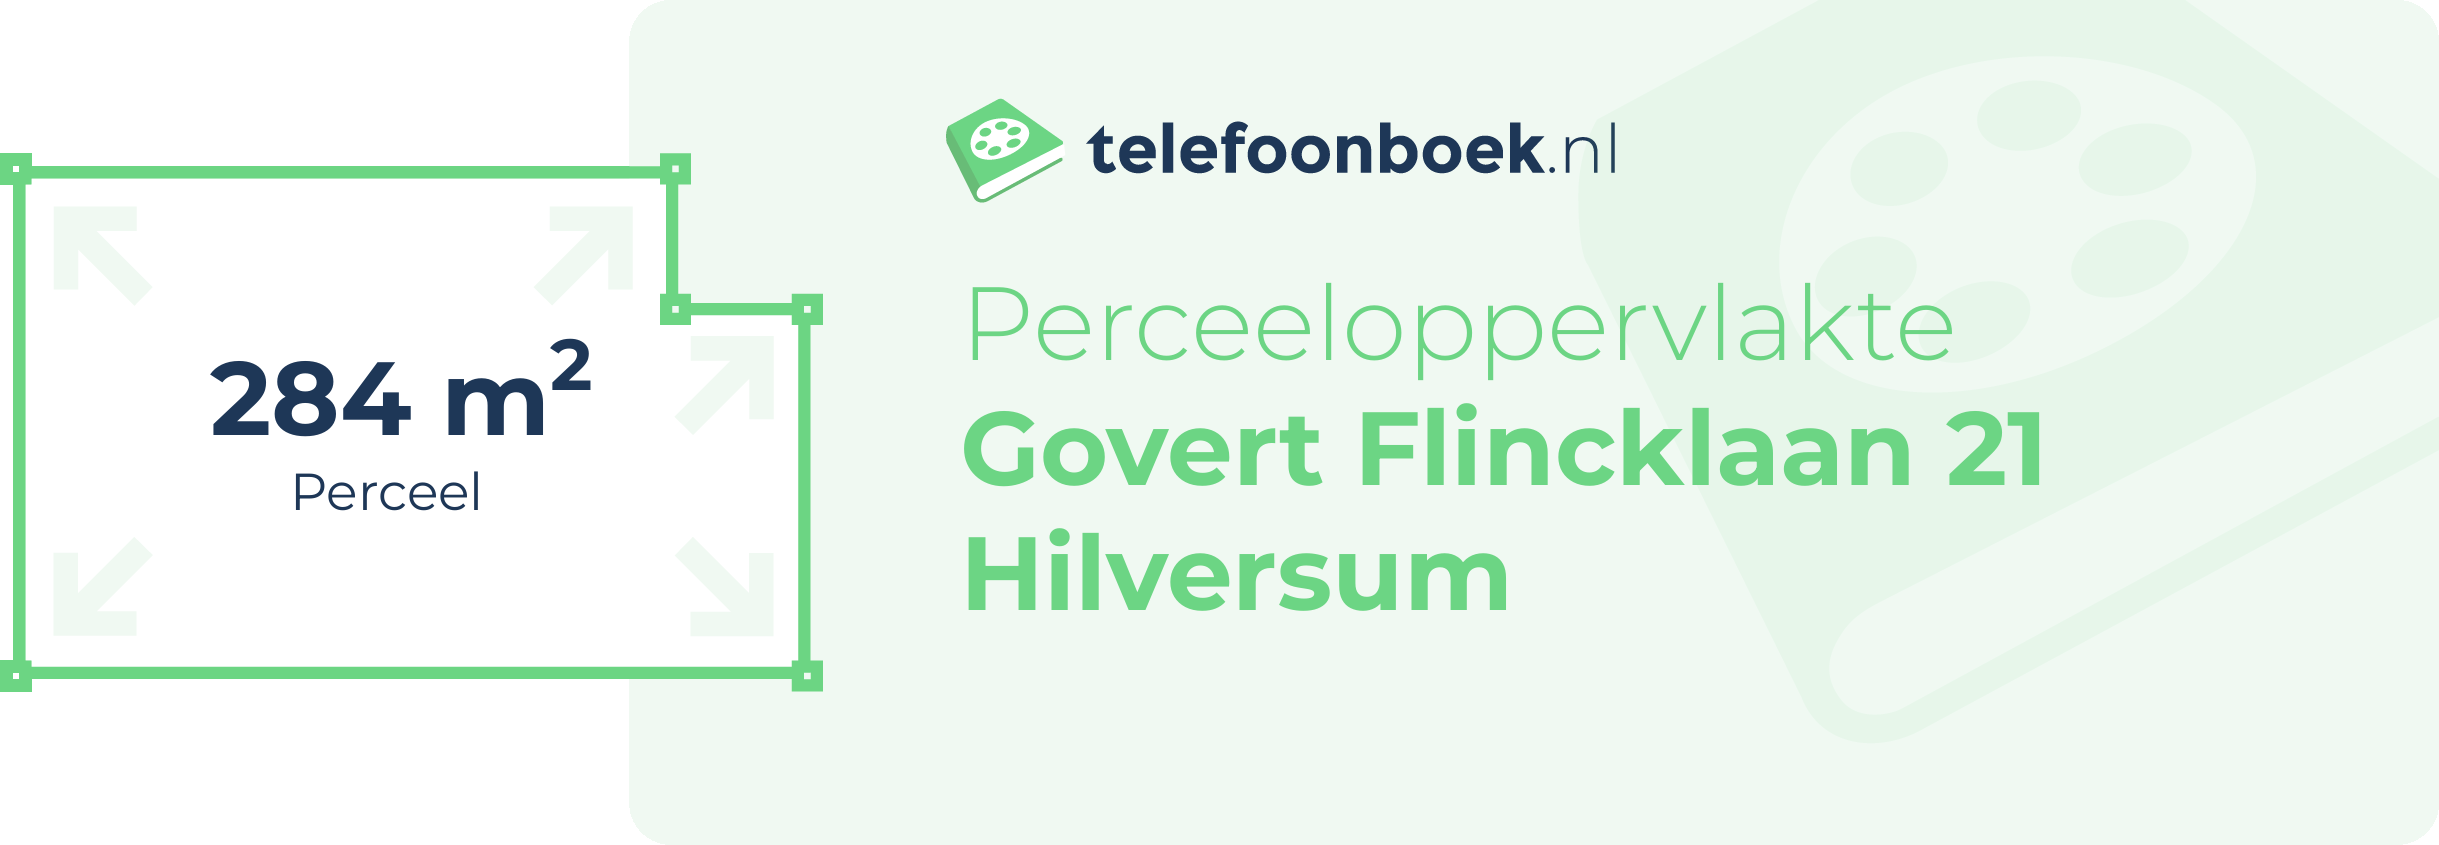 Perceeloppervlakte Govert Flincklaan 21 Hilversum